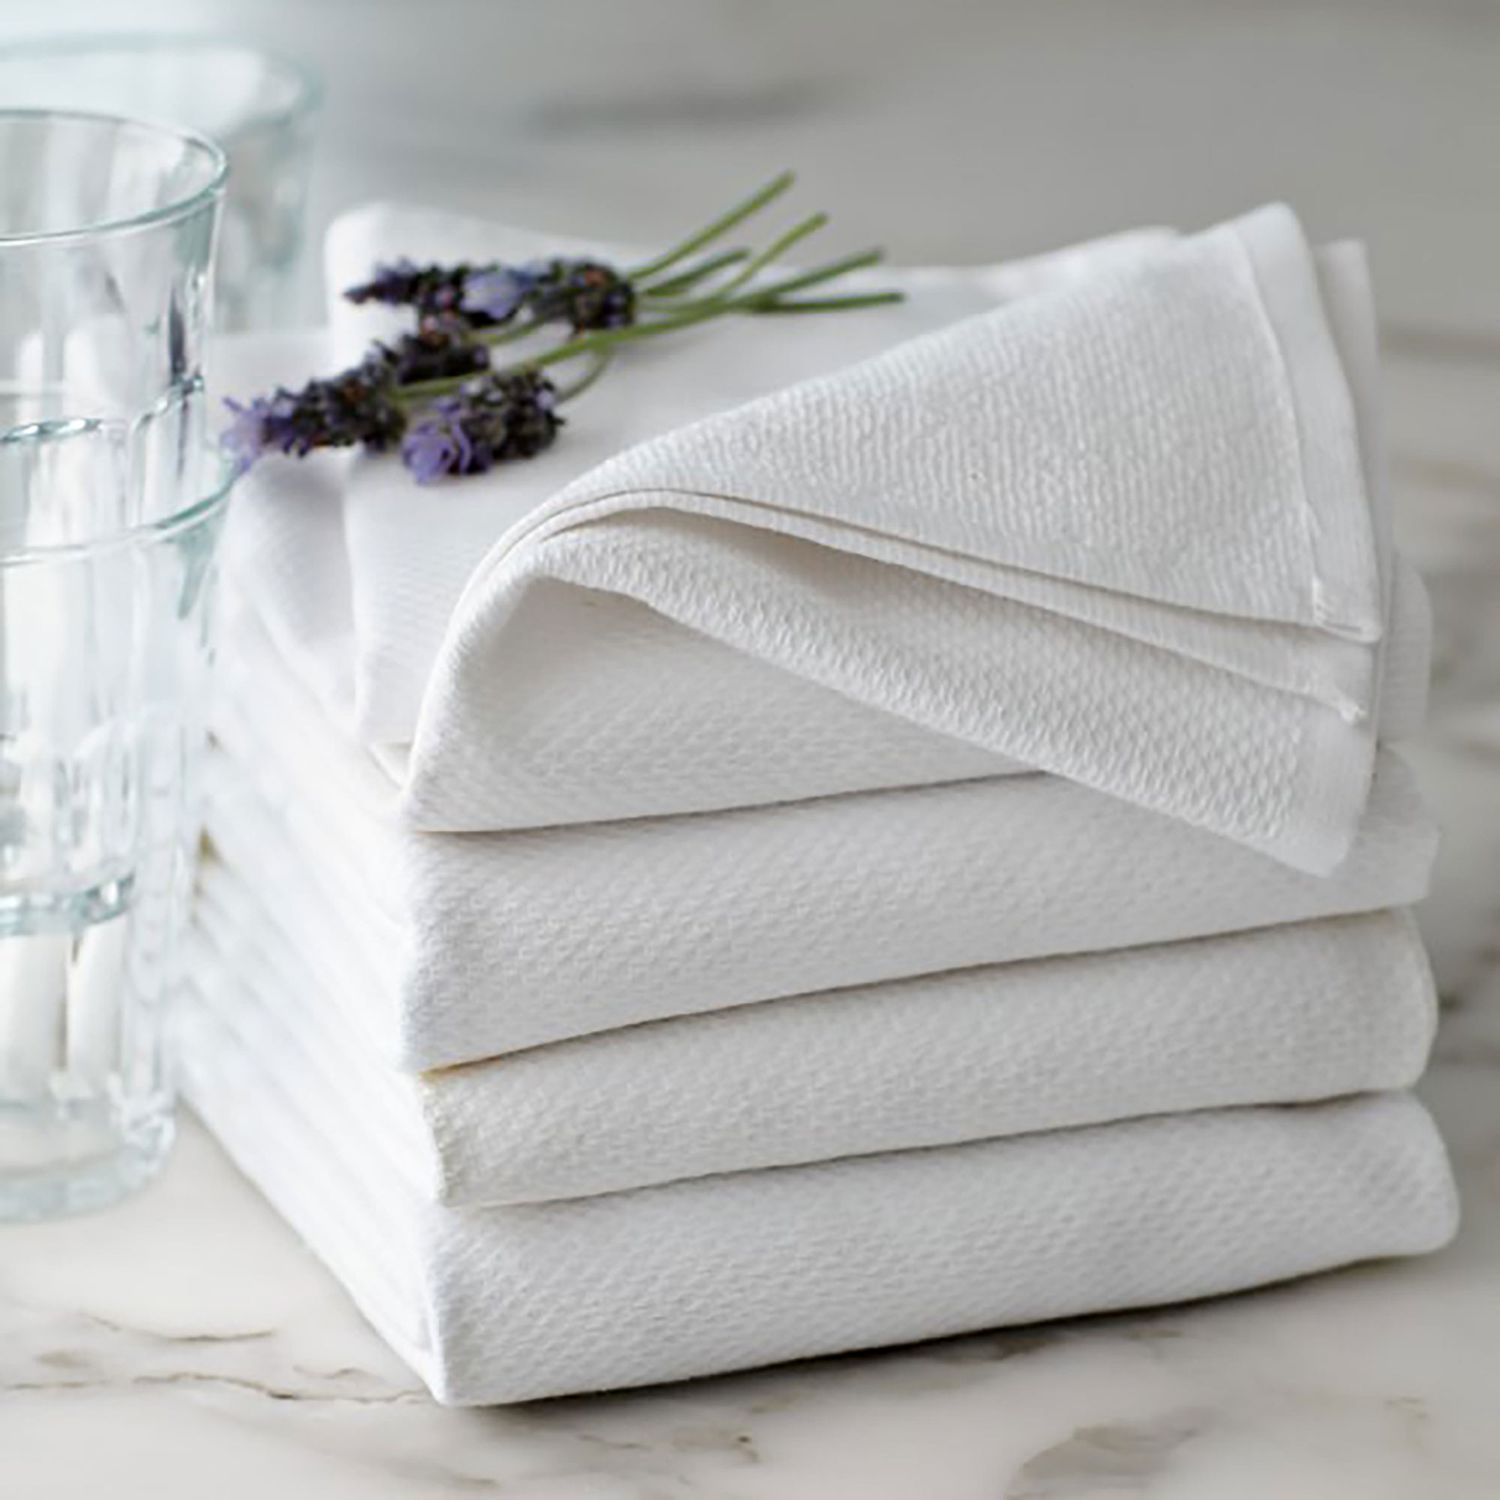 Williams Sonoma All Purpose Pantry Towel Set in white